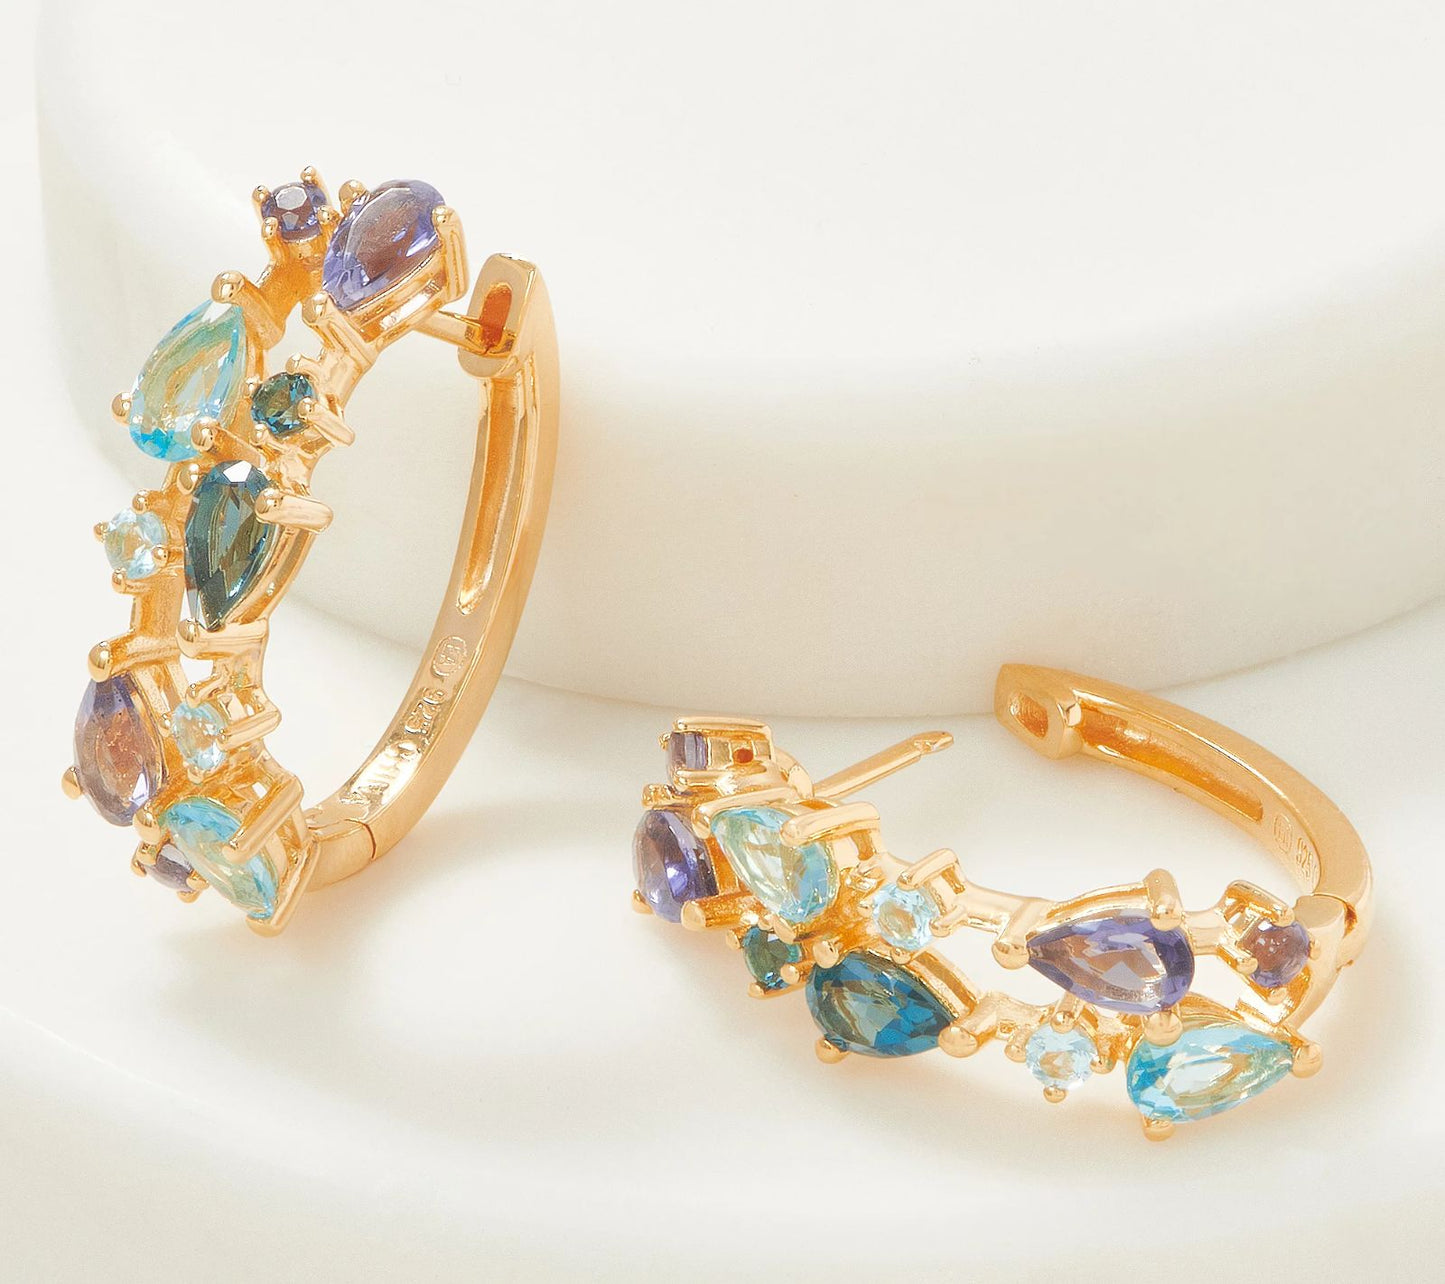 Affinity Gems 14K Gold-Plated Sterling Silver Mixed Cut Gemstone Hoop Earrings (